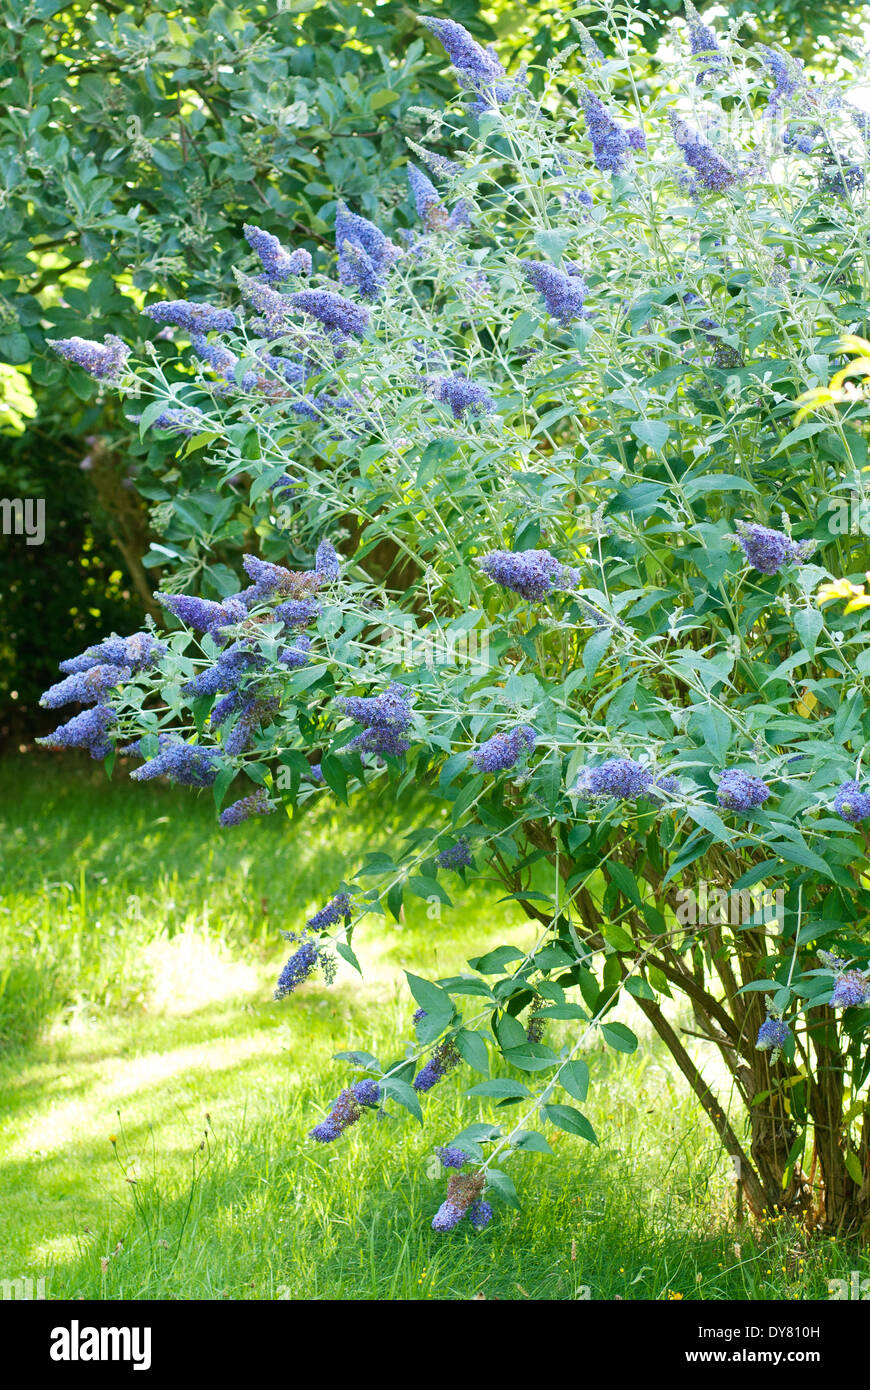 Buddleja 'Lochinch', Butterfly Bush. Shrub, July, Summer. Bush covered in purple flowers. Stock Photo